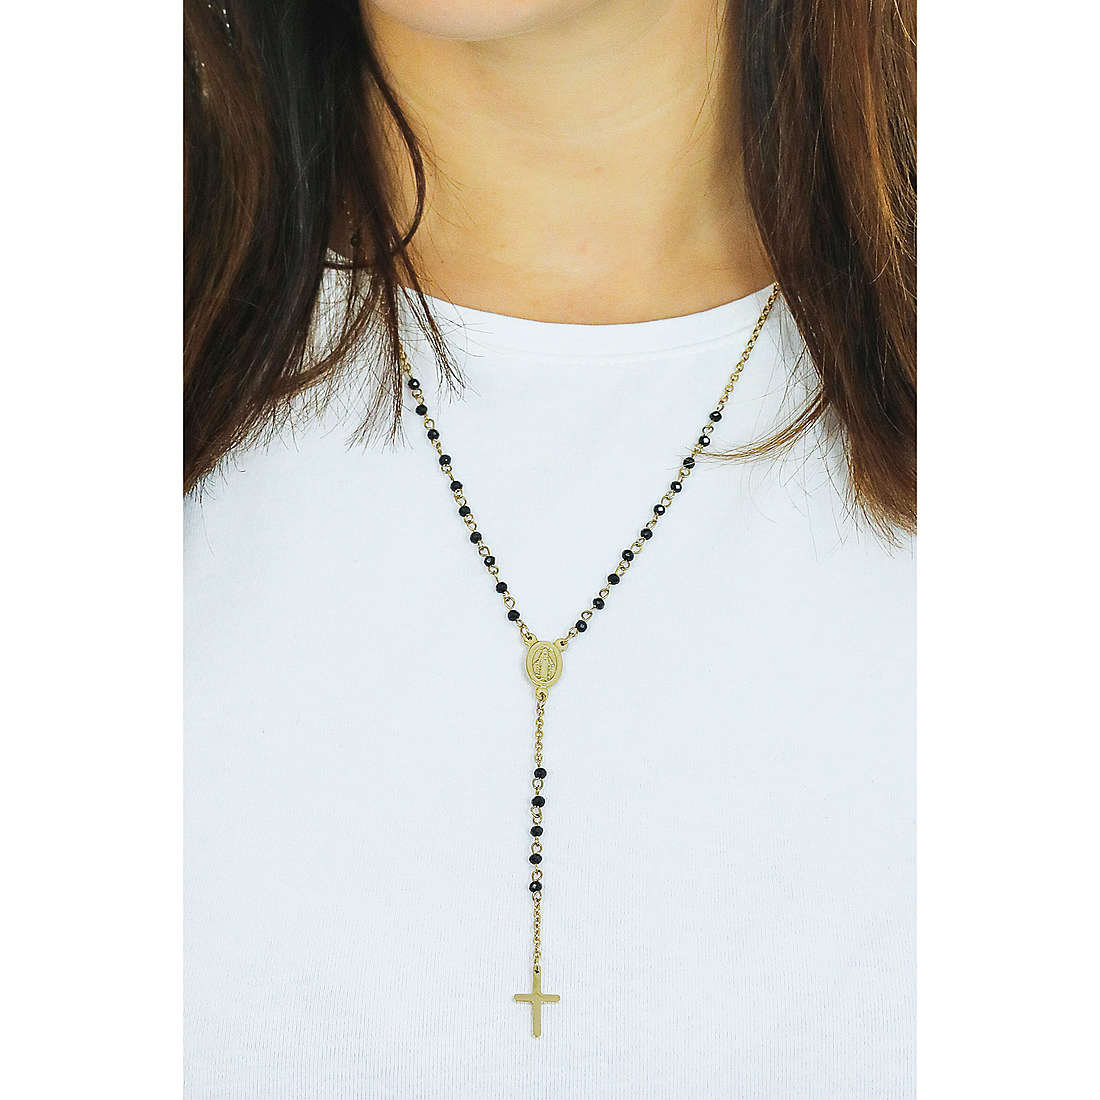 Luca Barra colliers Rosary femme LBCK1338 Je porte